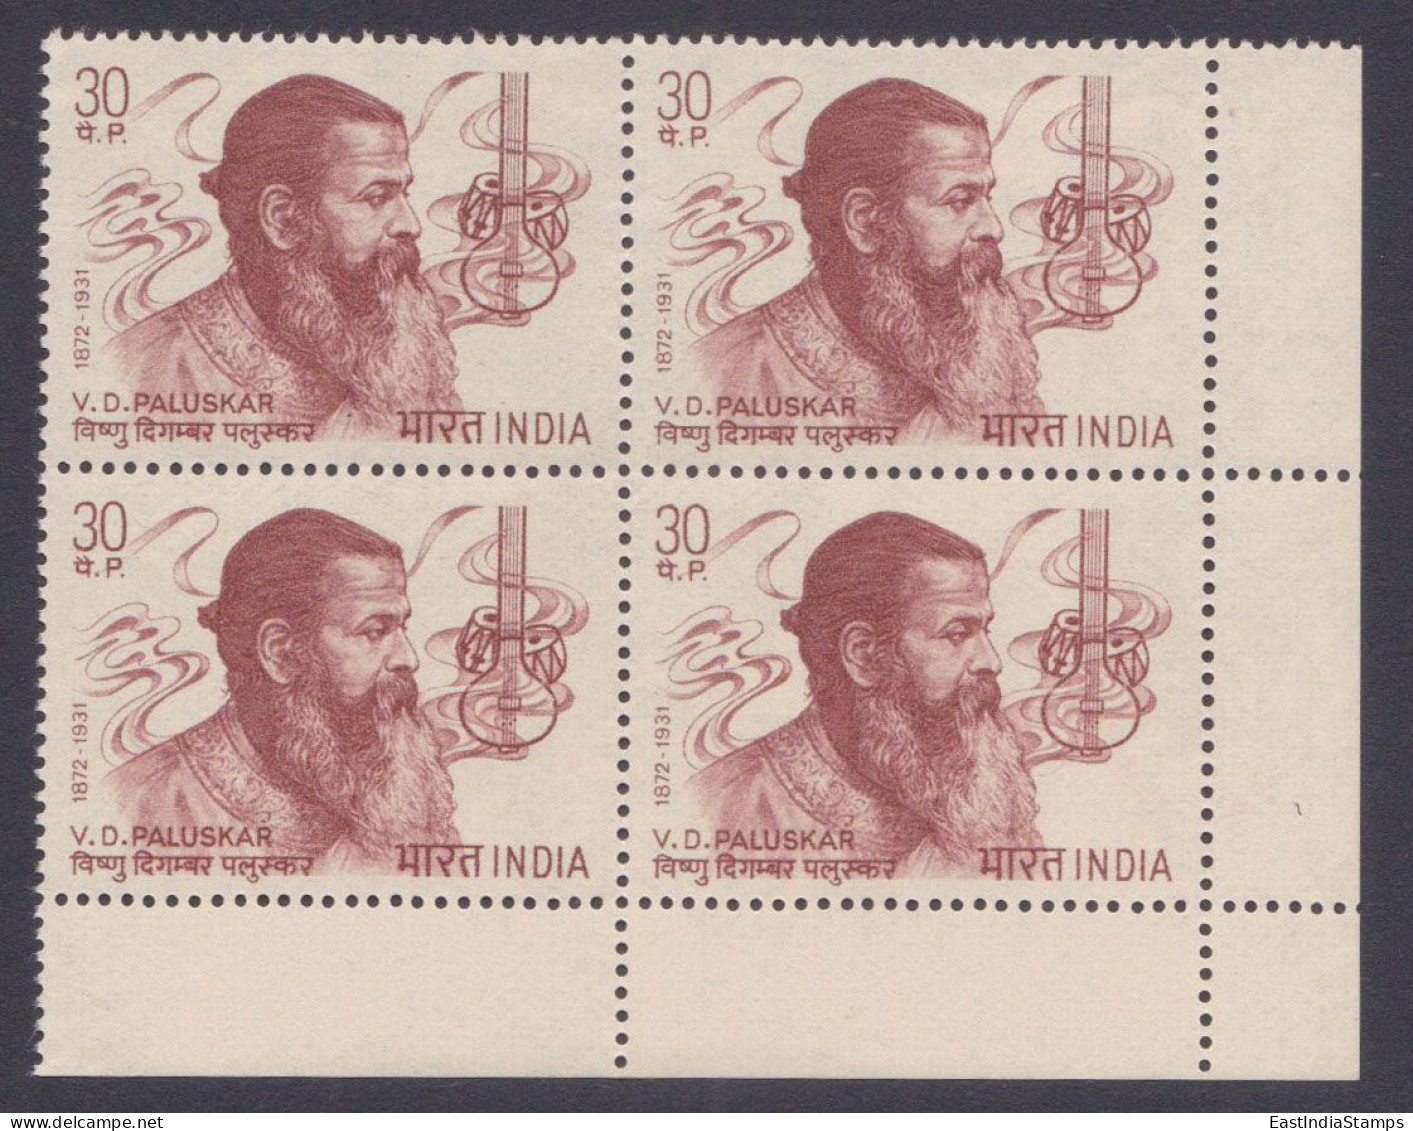 Inde India 1973 MNH V.D. Paluskar, Hindustani Musician, Music, Arts, Art, Artist, Sitar, Tabla, Musical Instrument Block - Nuovi